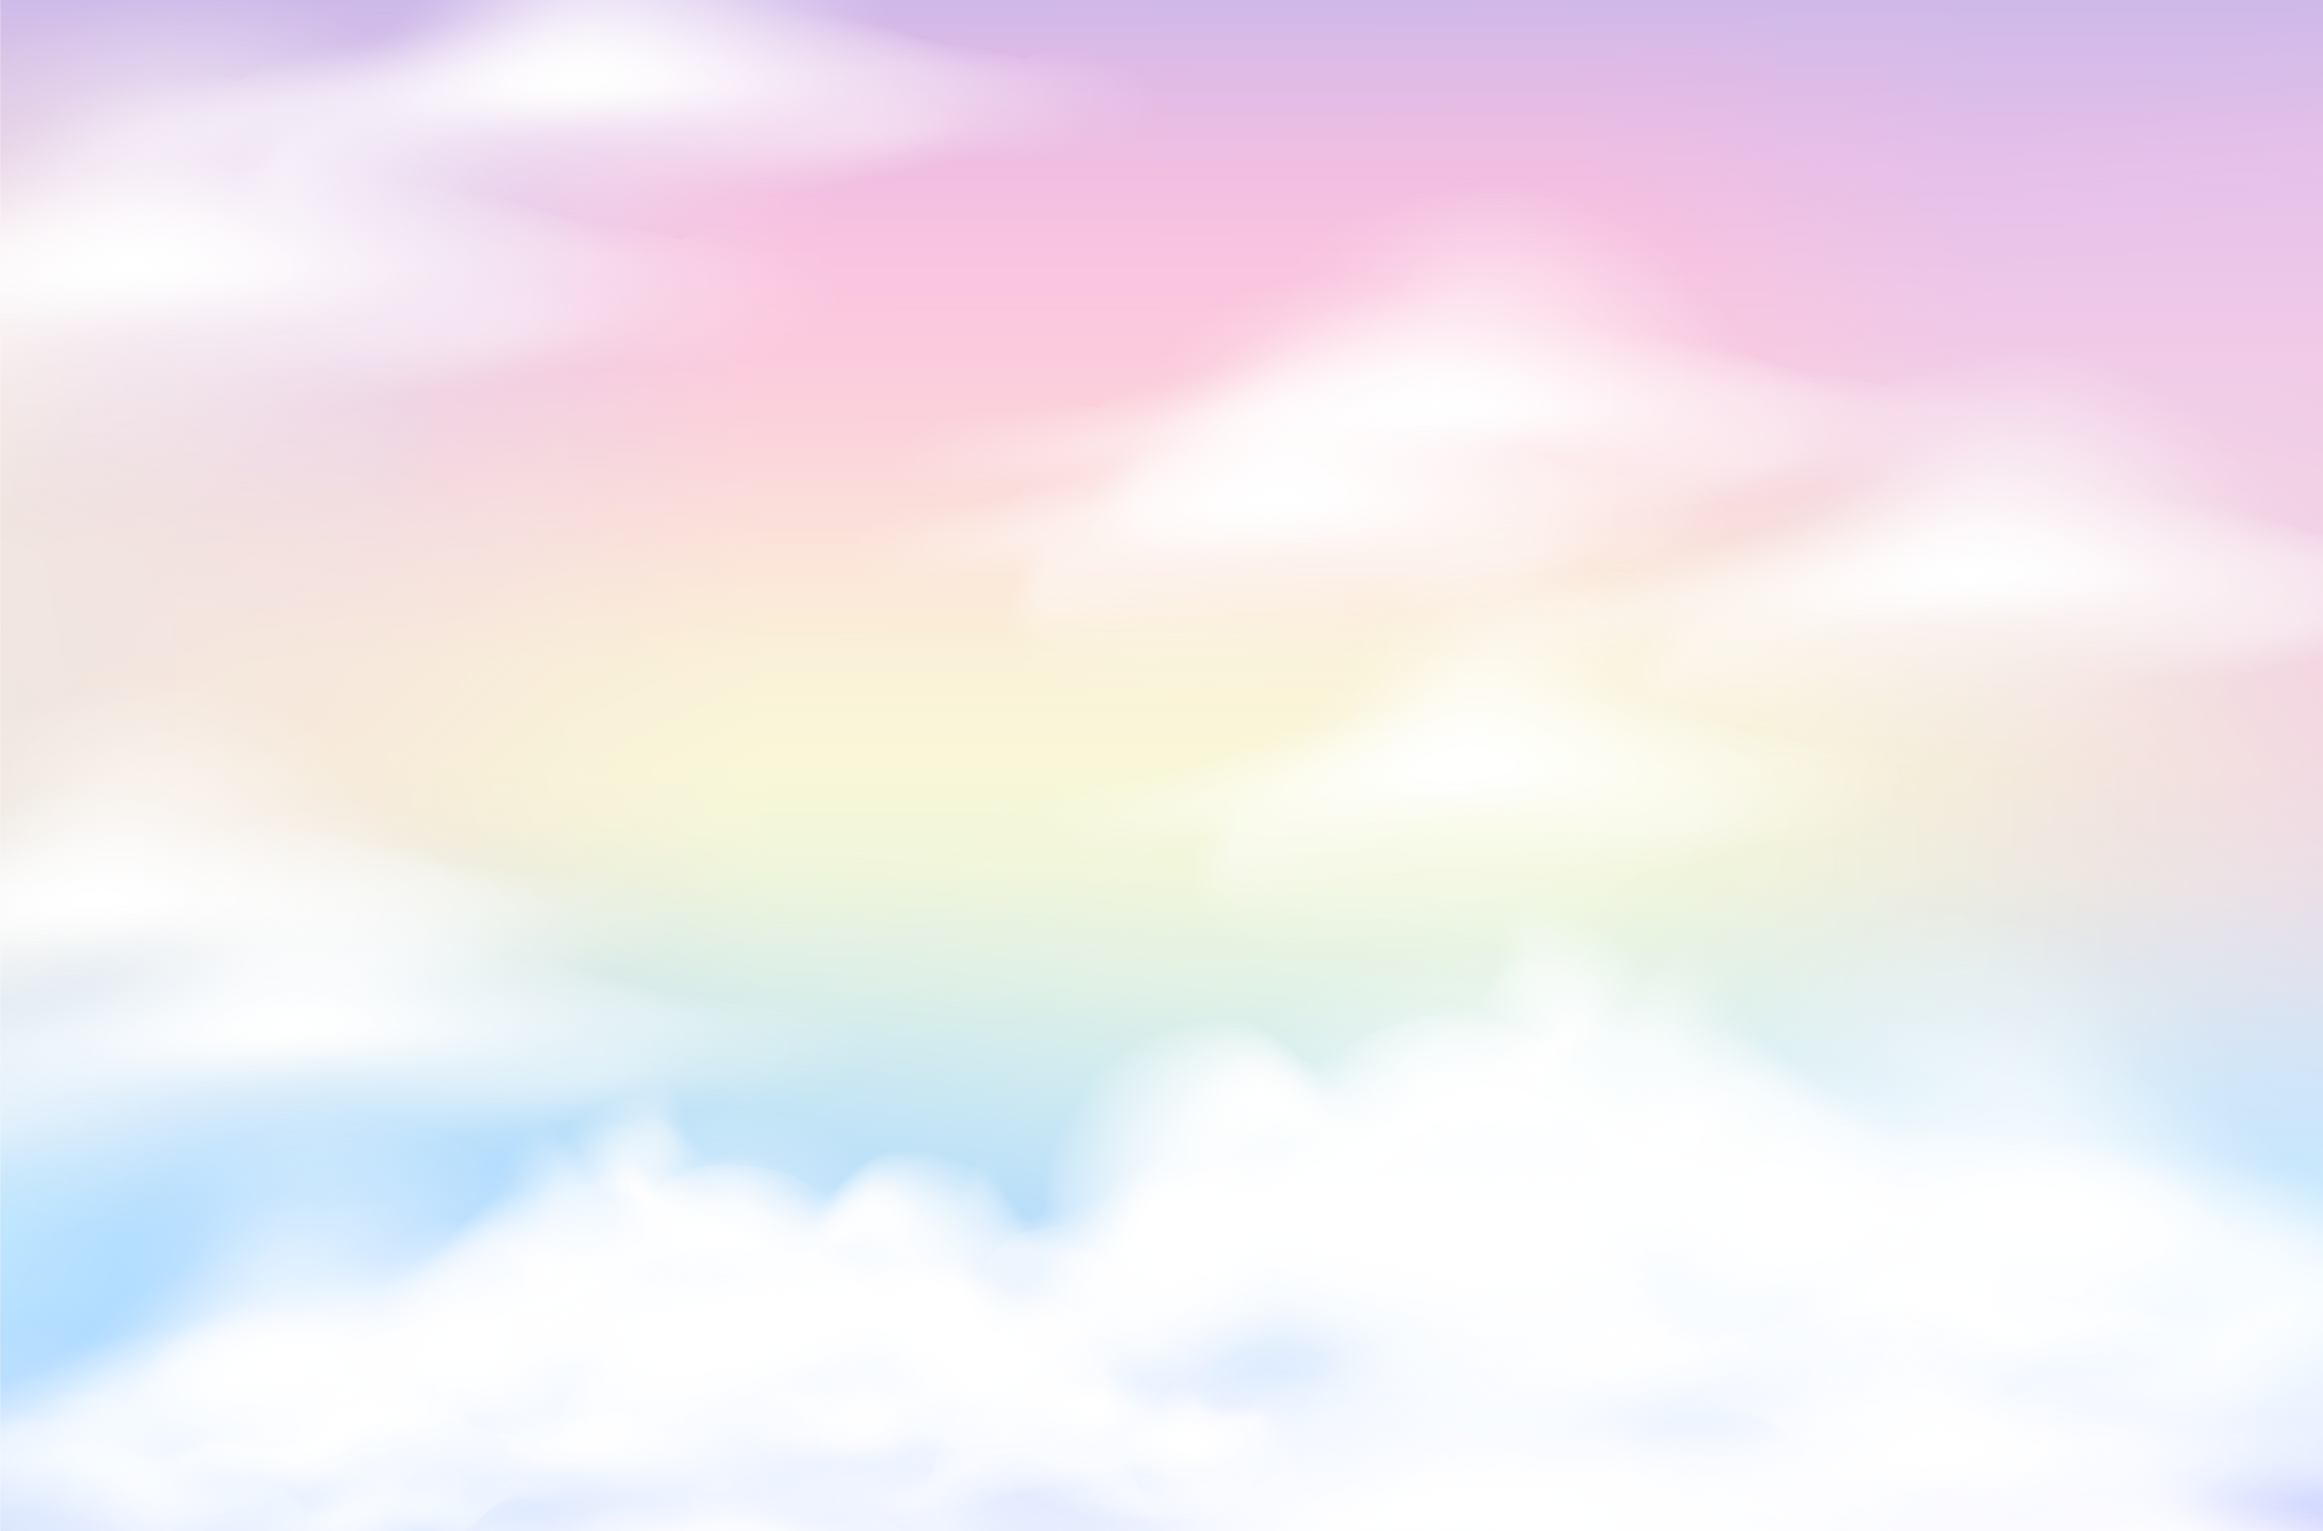 Rainbow pastel blurred sky background